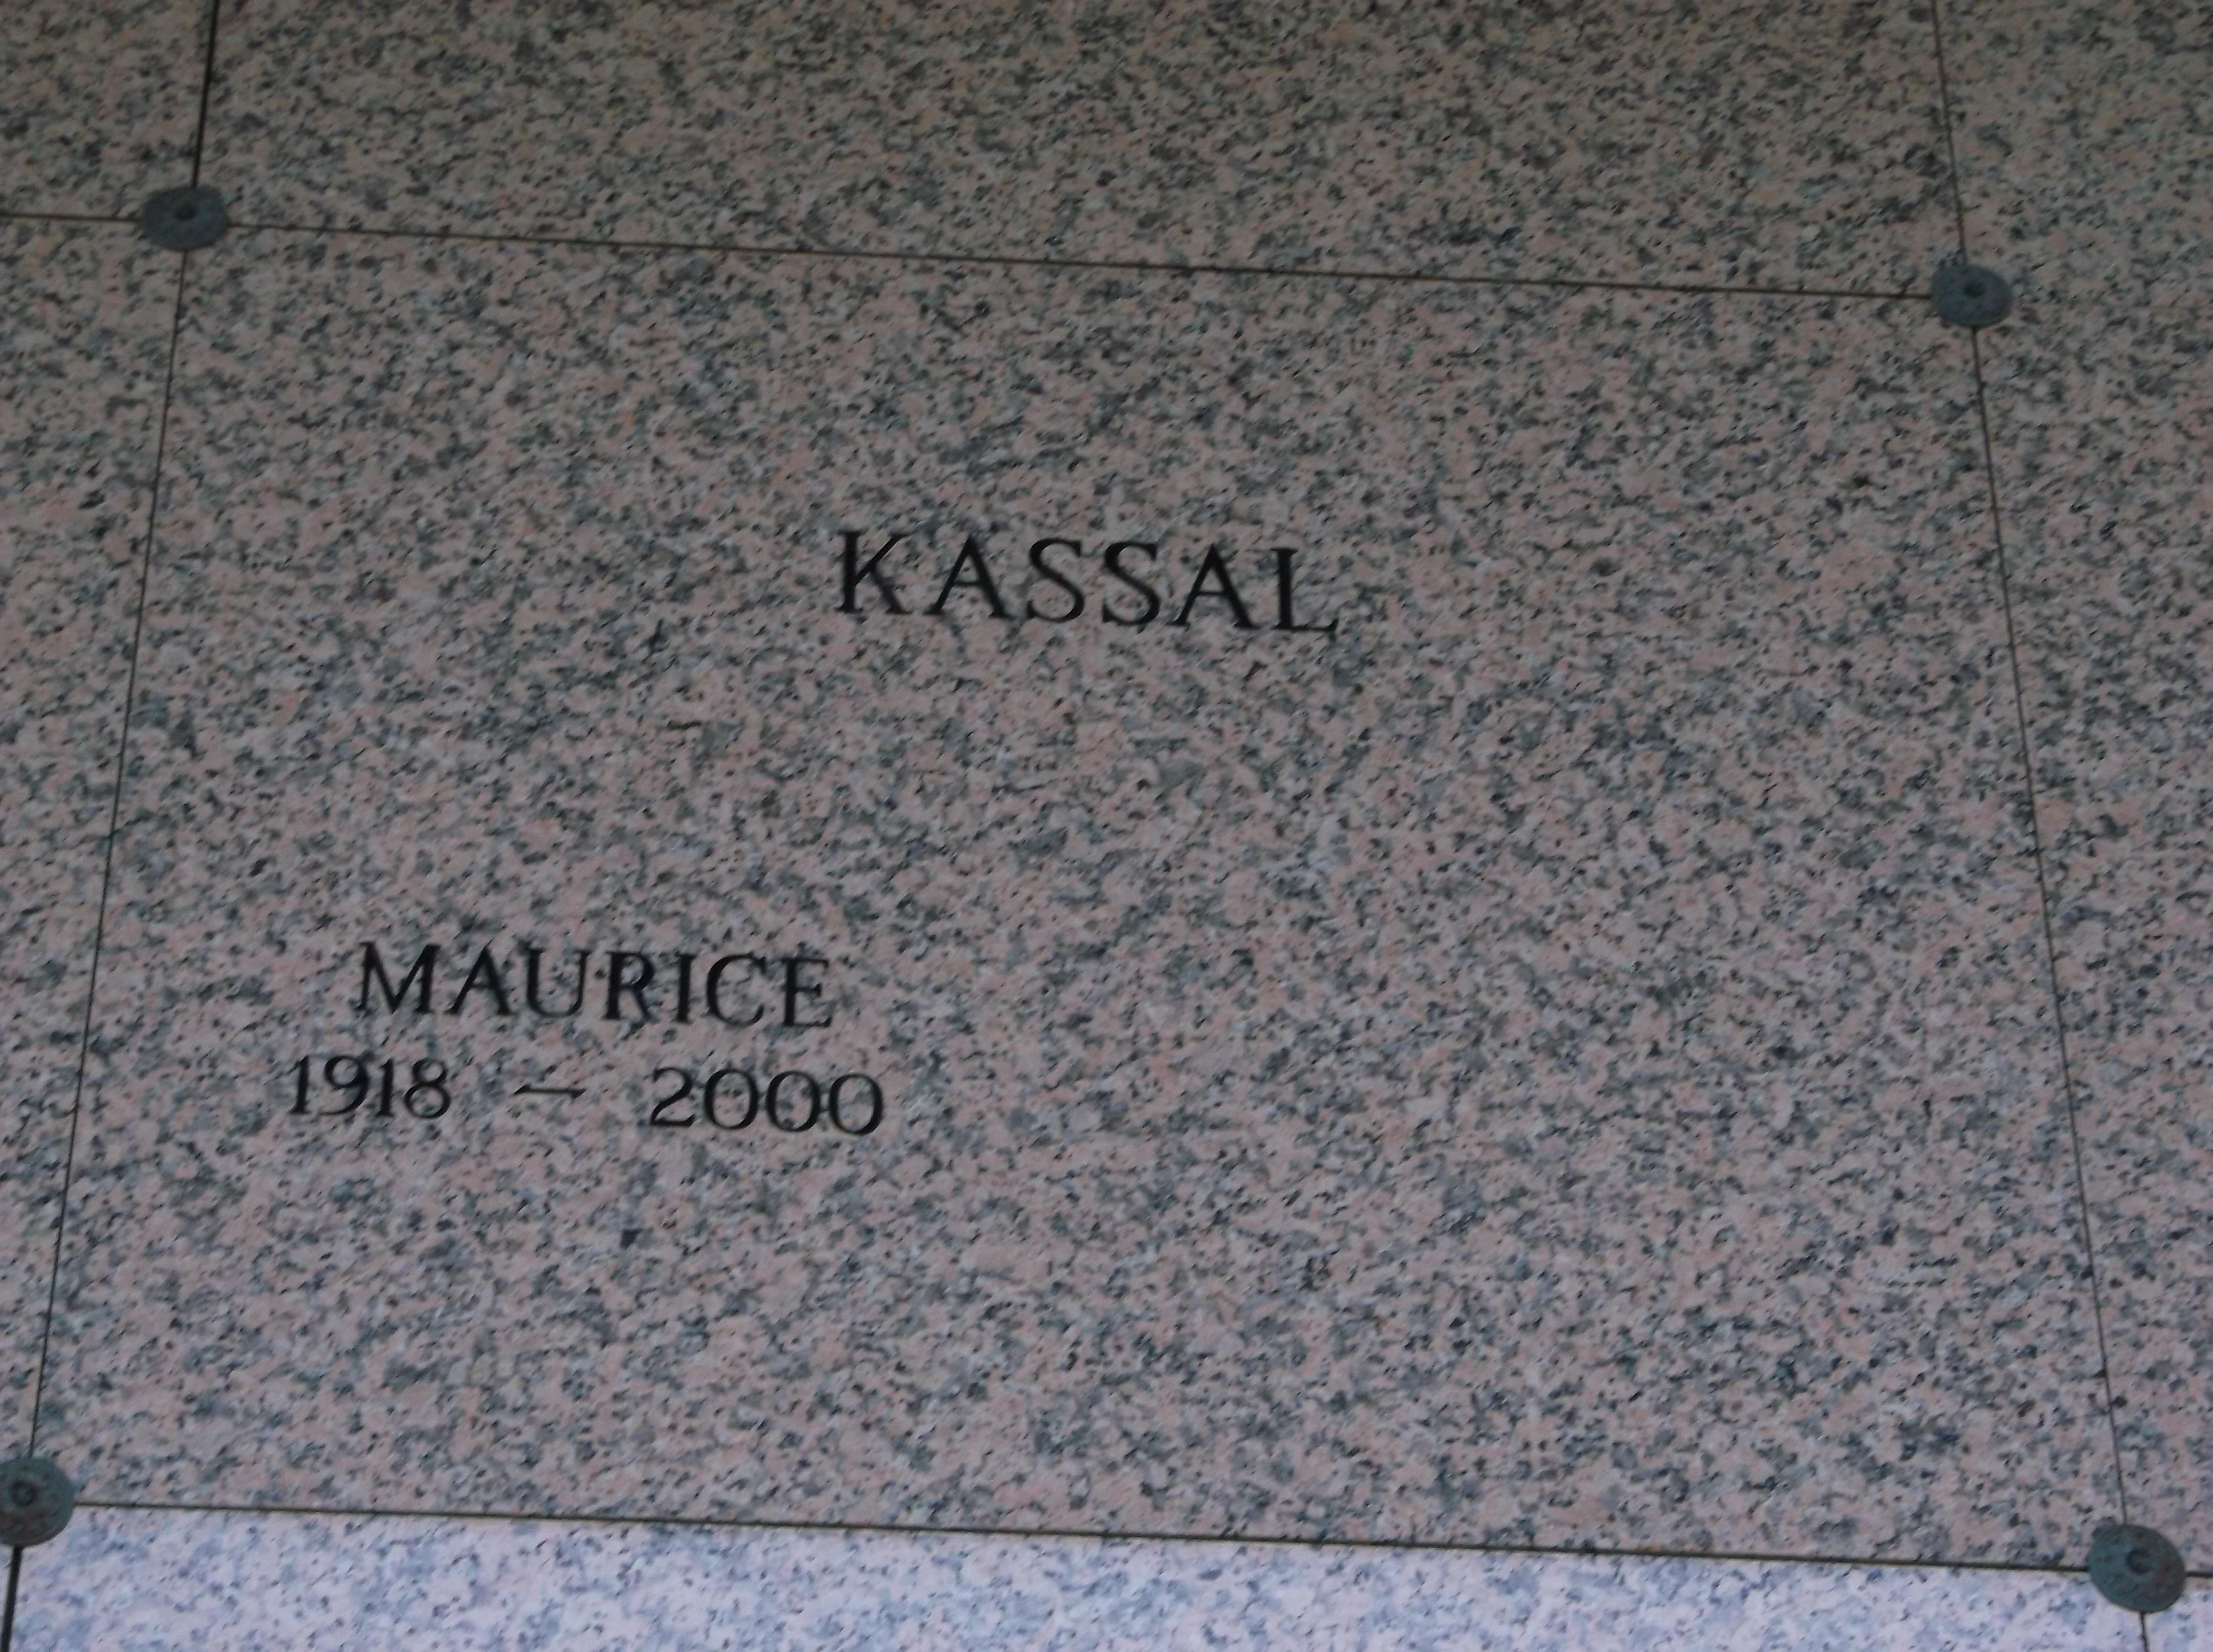 Maurice Kassal